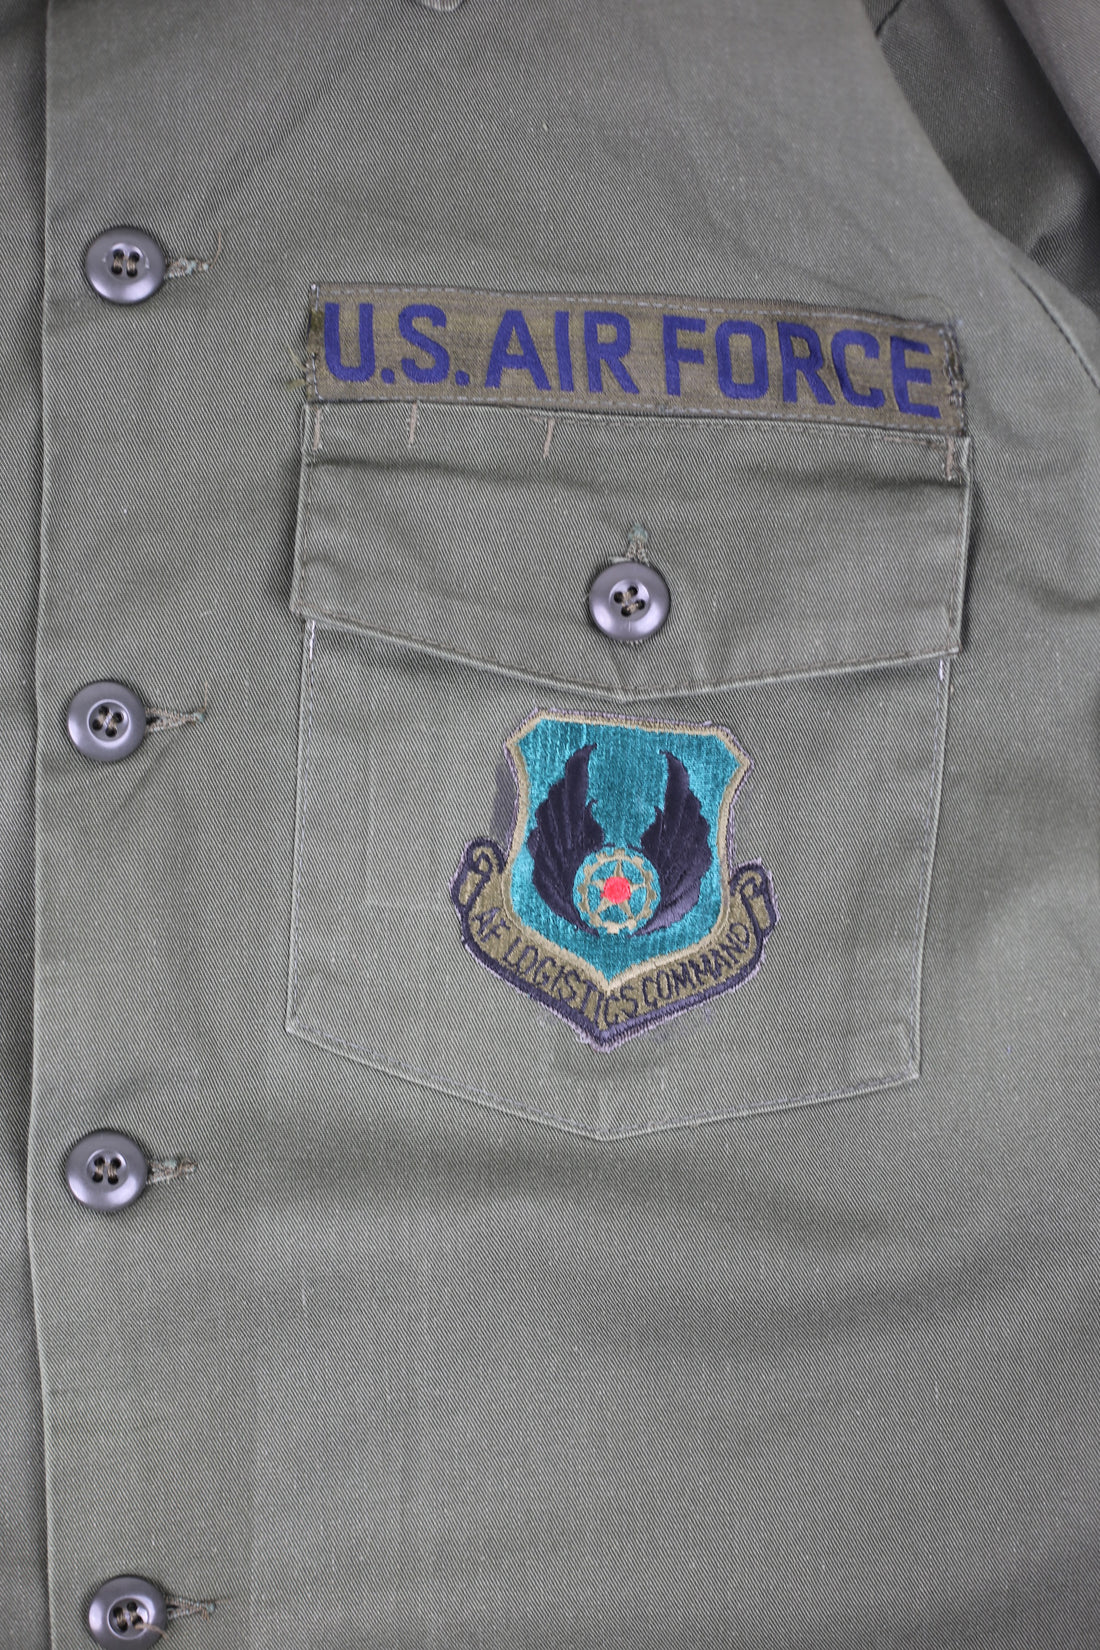 Camicia Og 507 Us Air Force   -  L/XL -